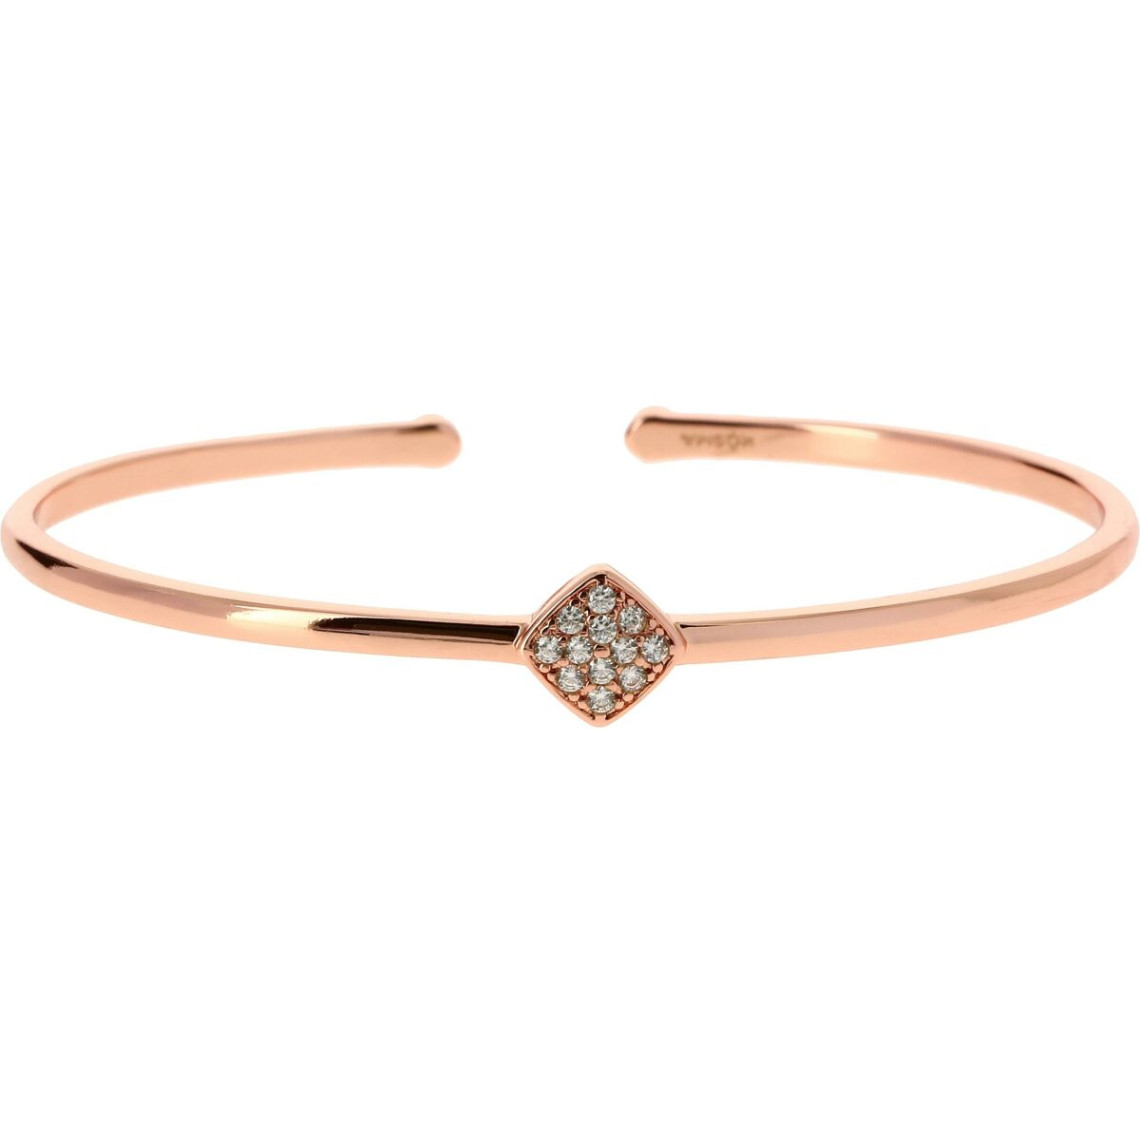 bracelet kosma ella jwbb00004-rosegold - métal doré rose & cristaux femme